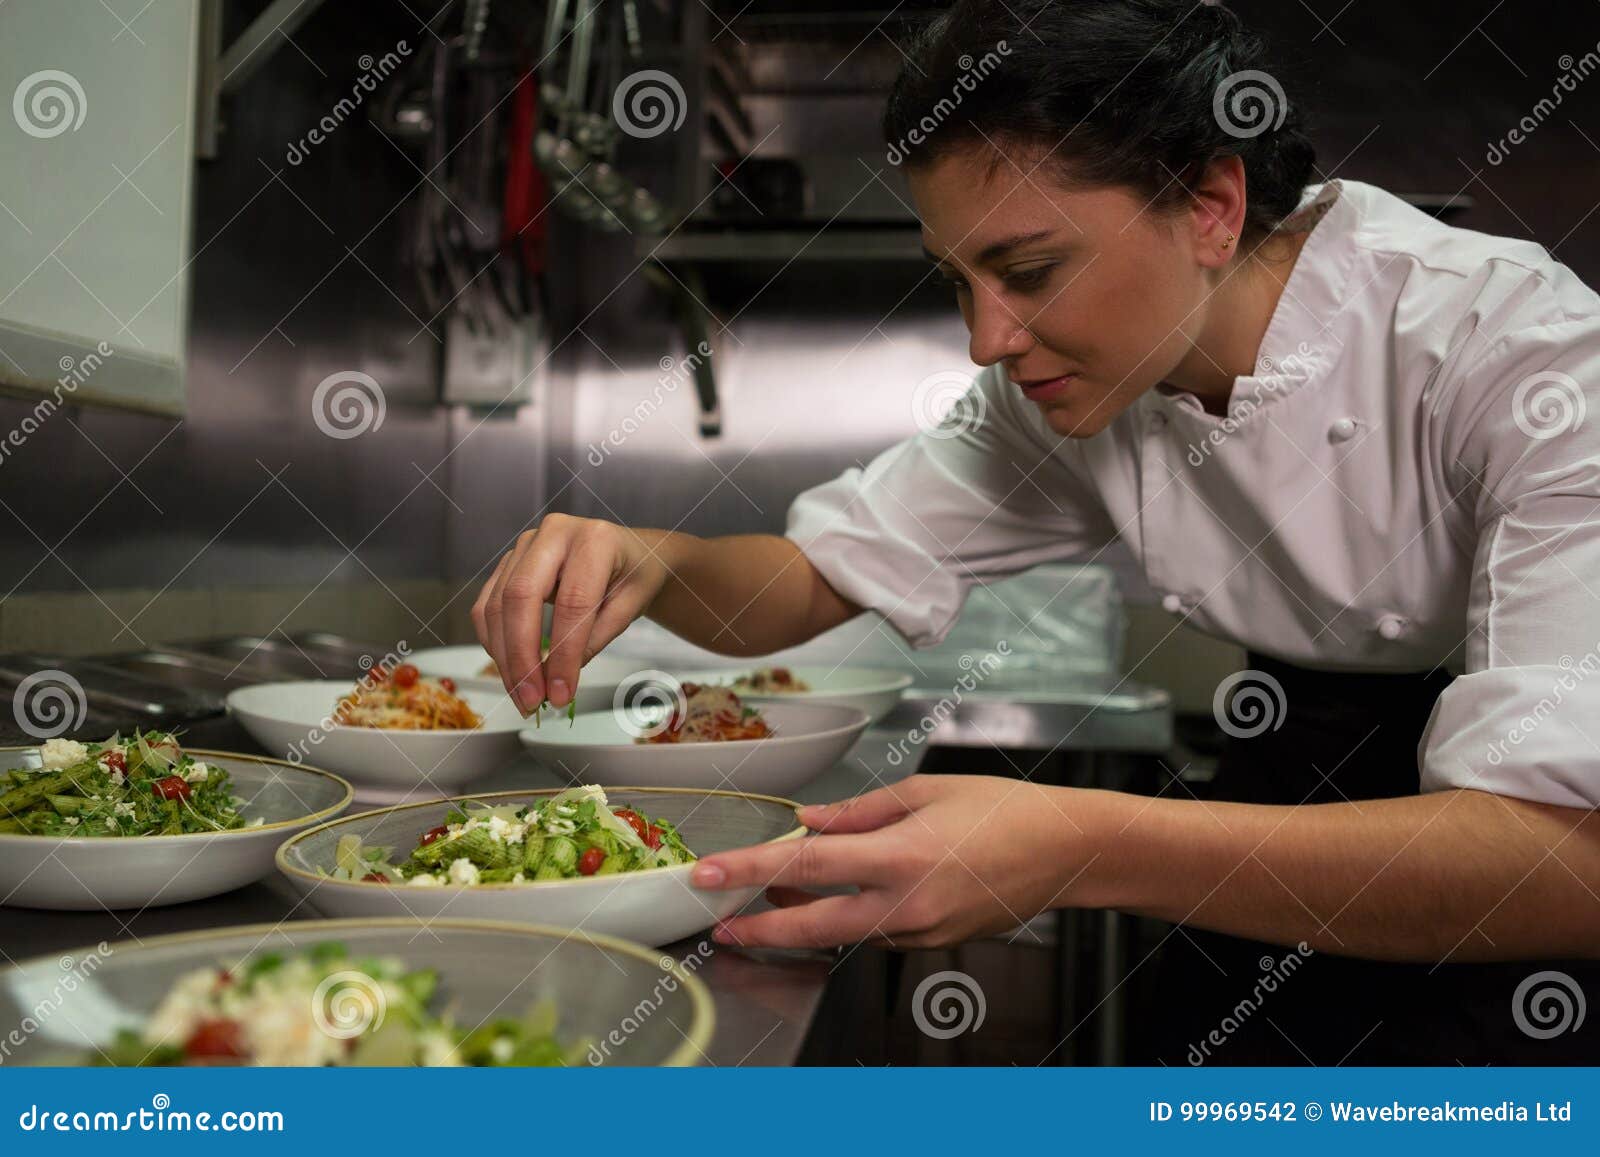 female chef garnishing appetizer plates at order station